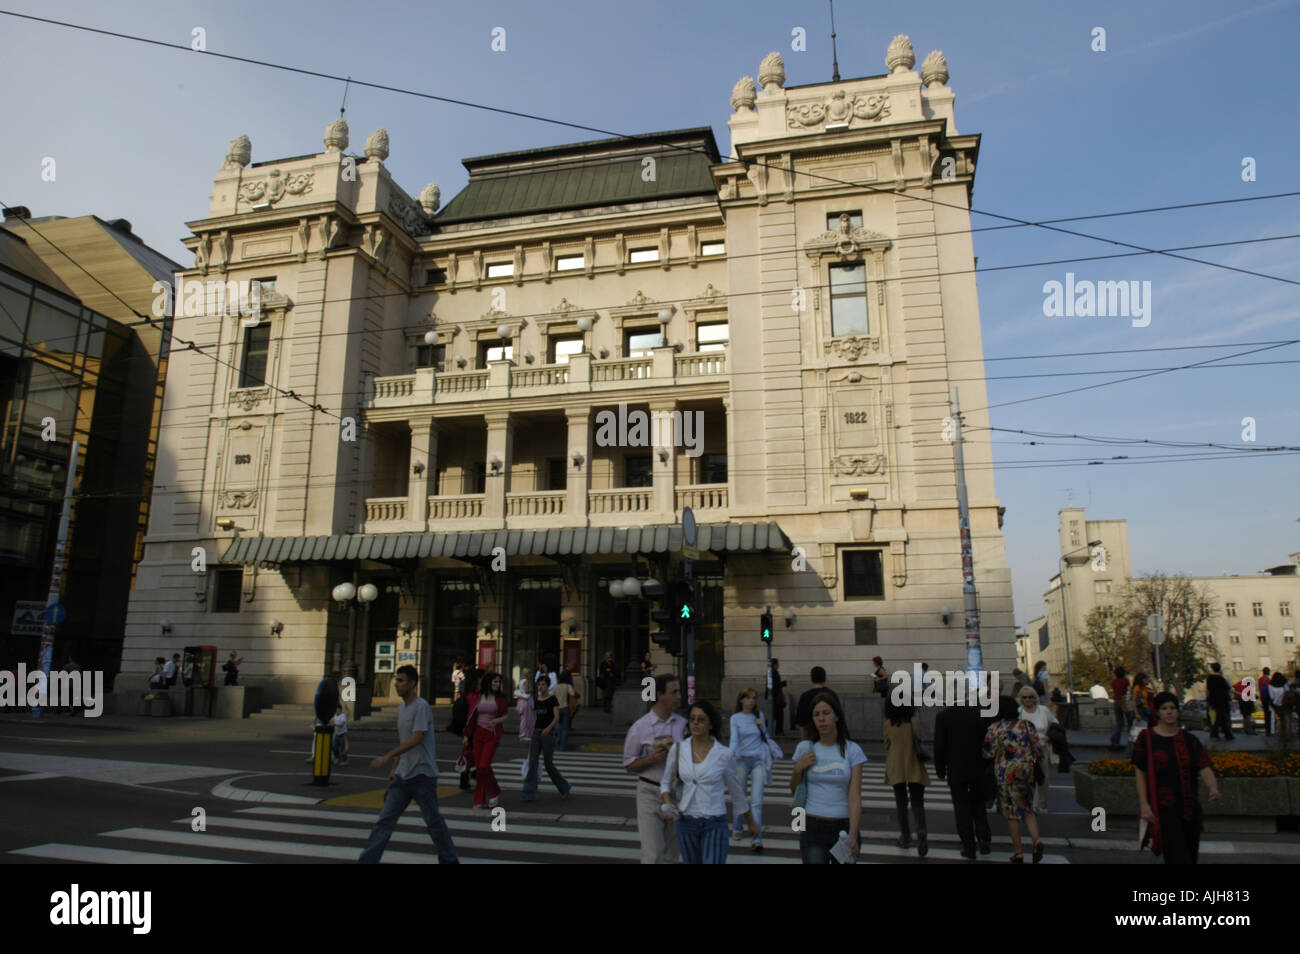 Beograd, city center, square Trg Republike Stock Photo